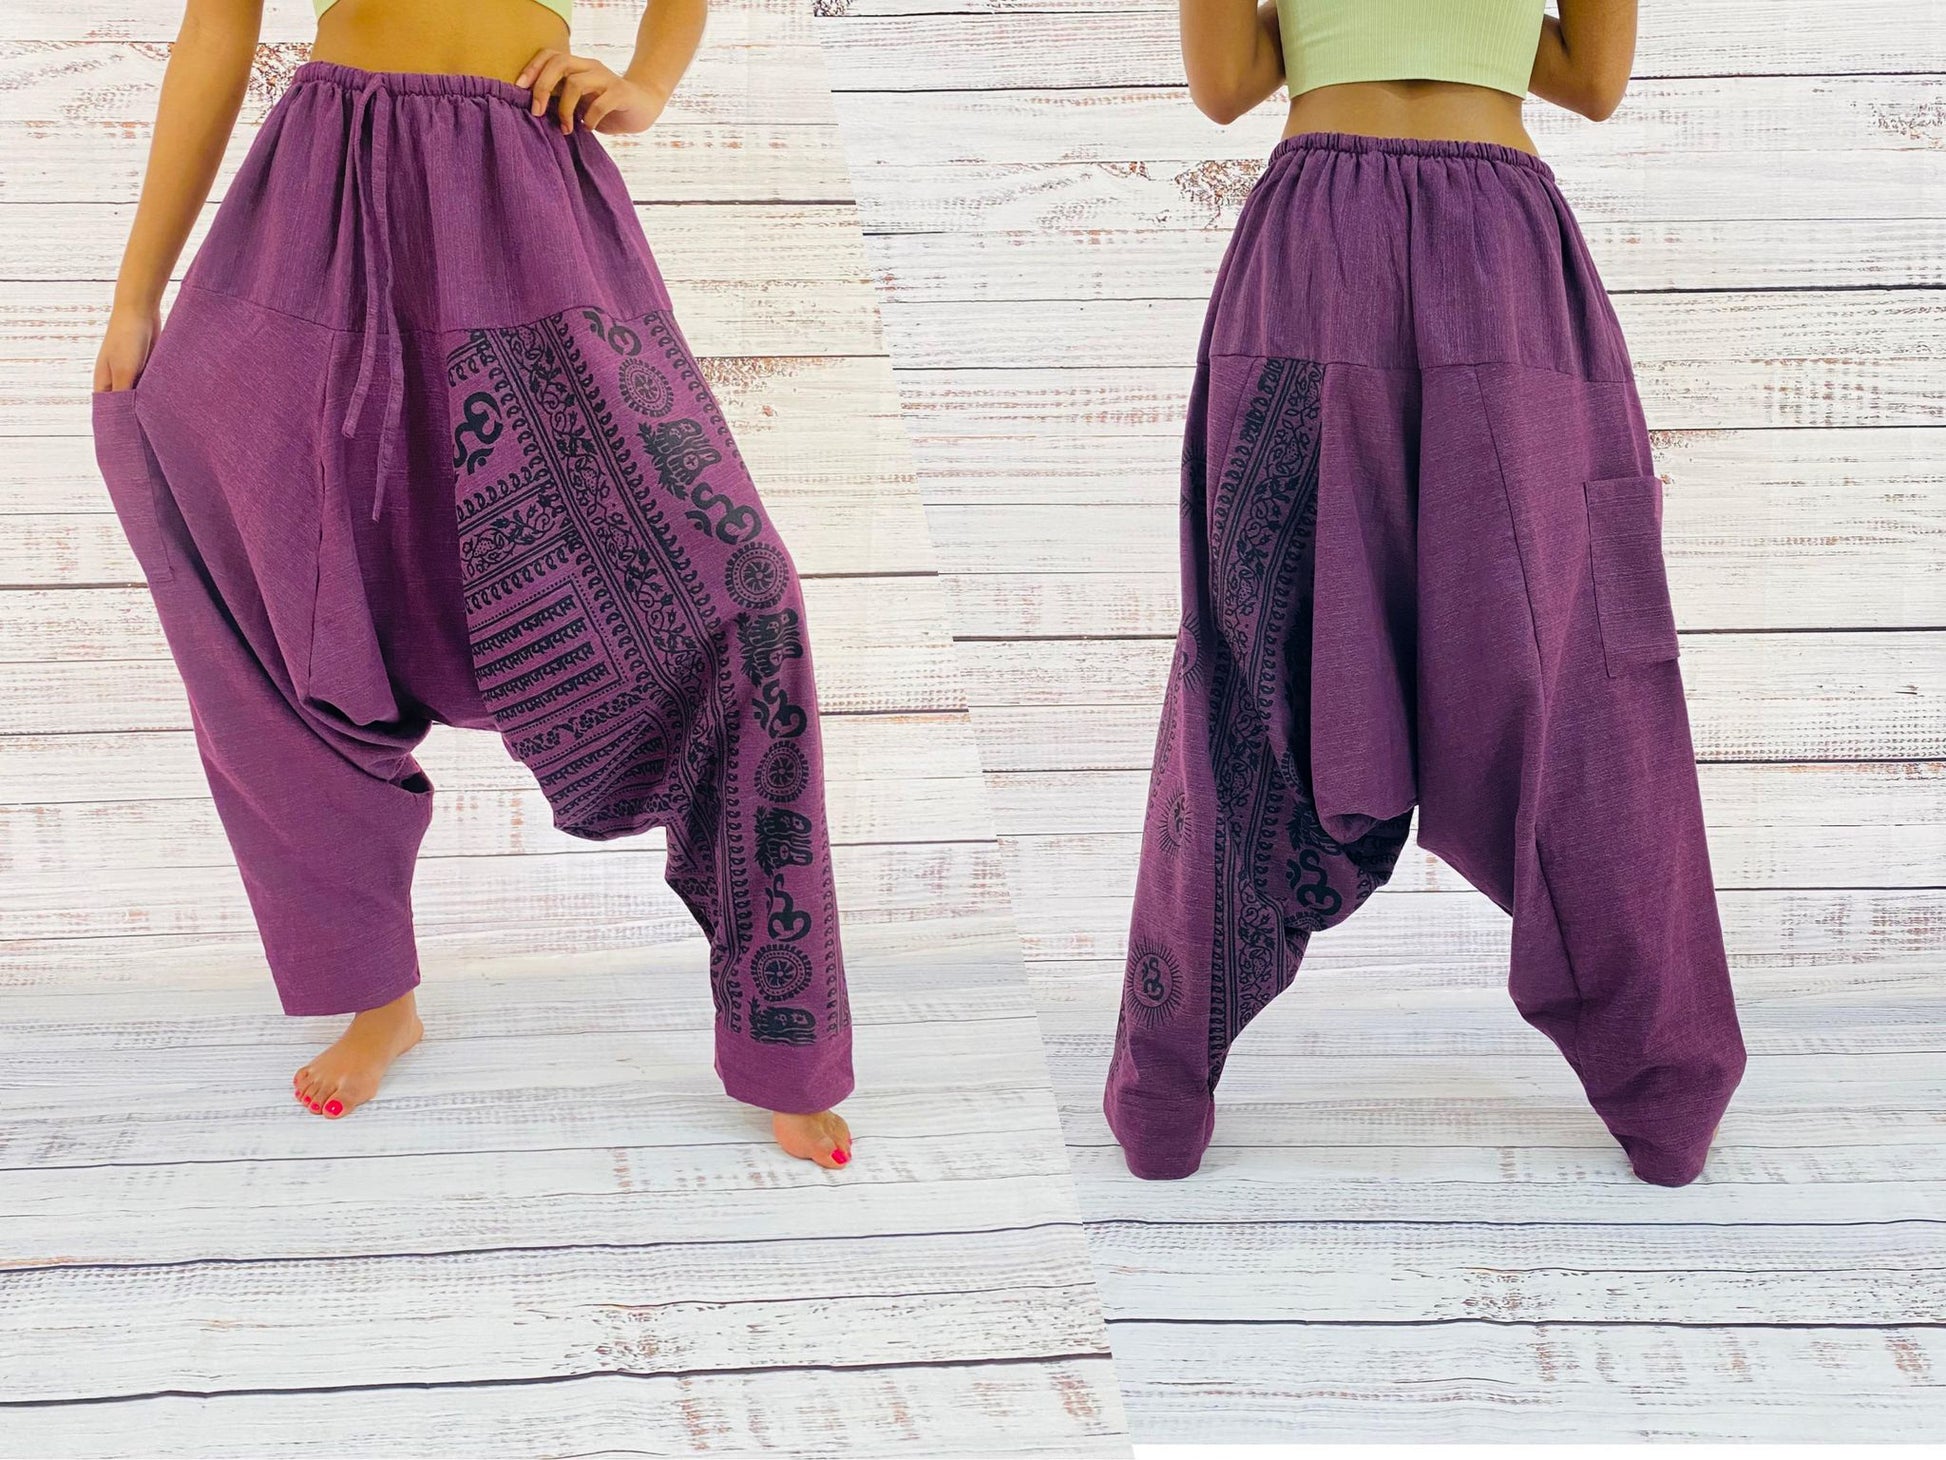 Plain Harem Pants in Cotton Bag, Pure Cotton Aladdin Pants, Yoga Pants for  Men and Women Perfect Gift 